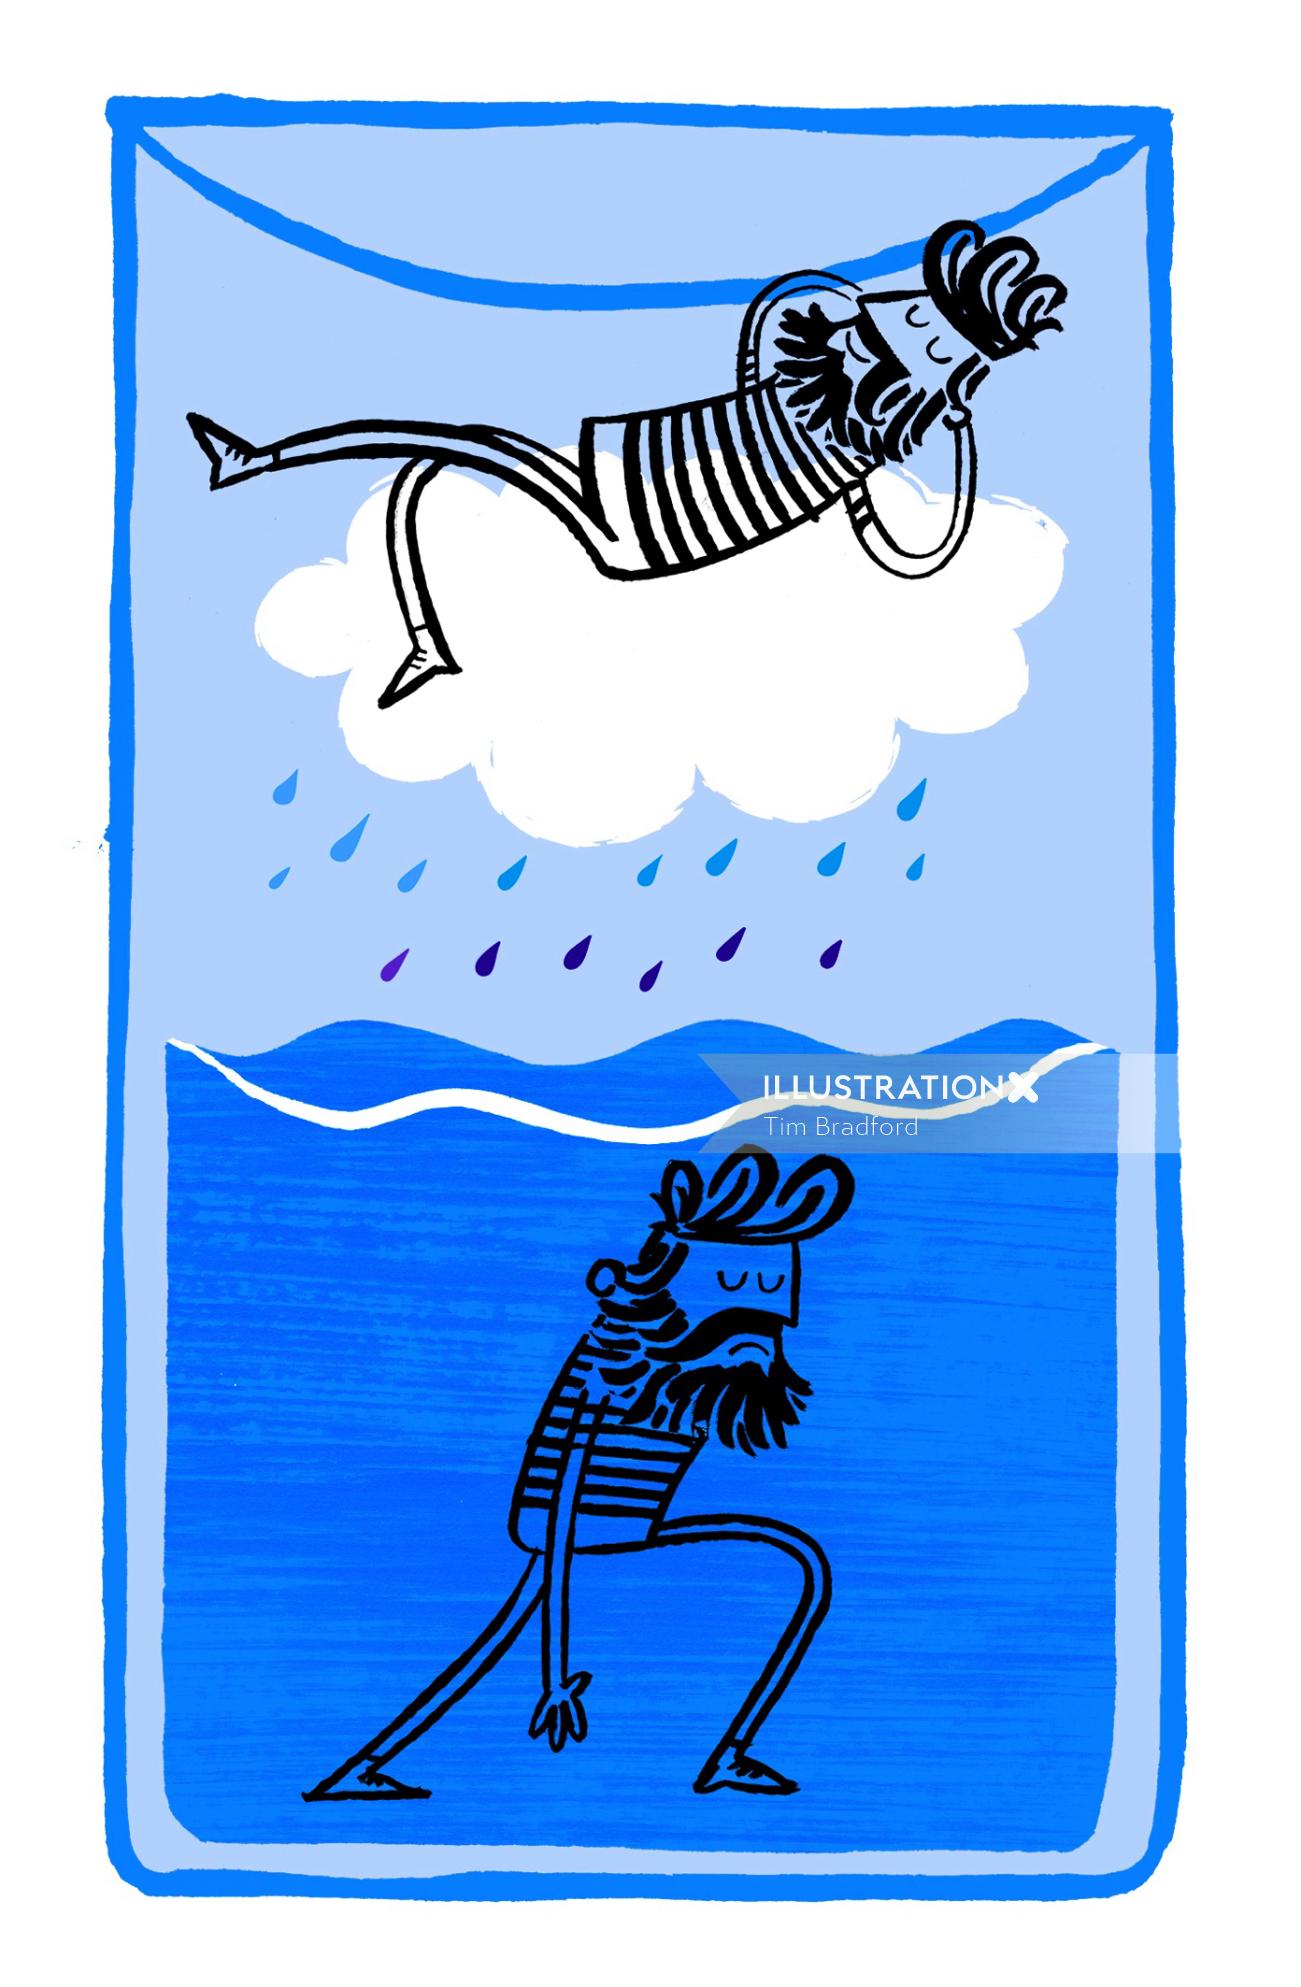 Illustration of character in rain